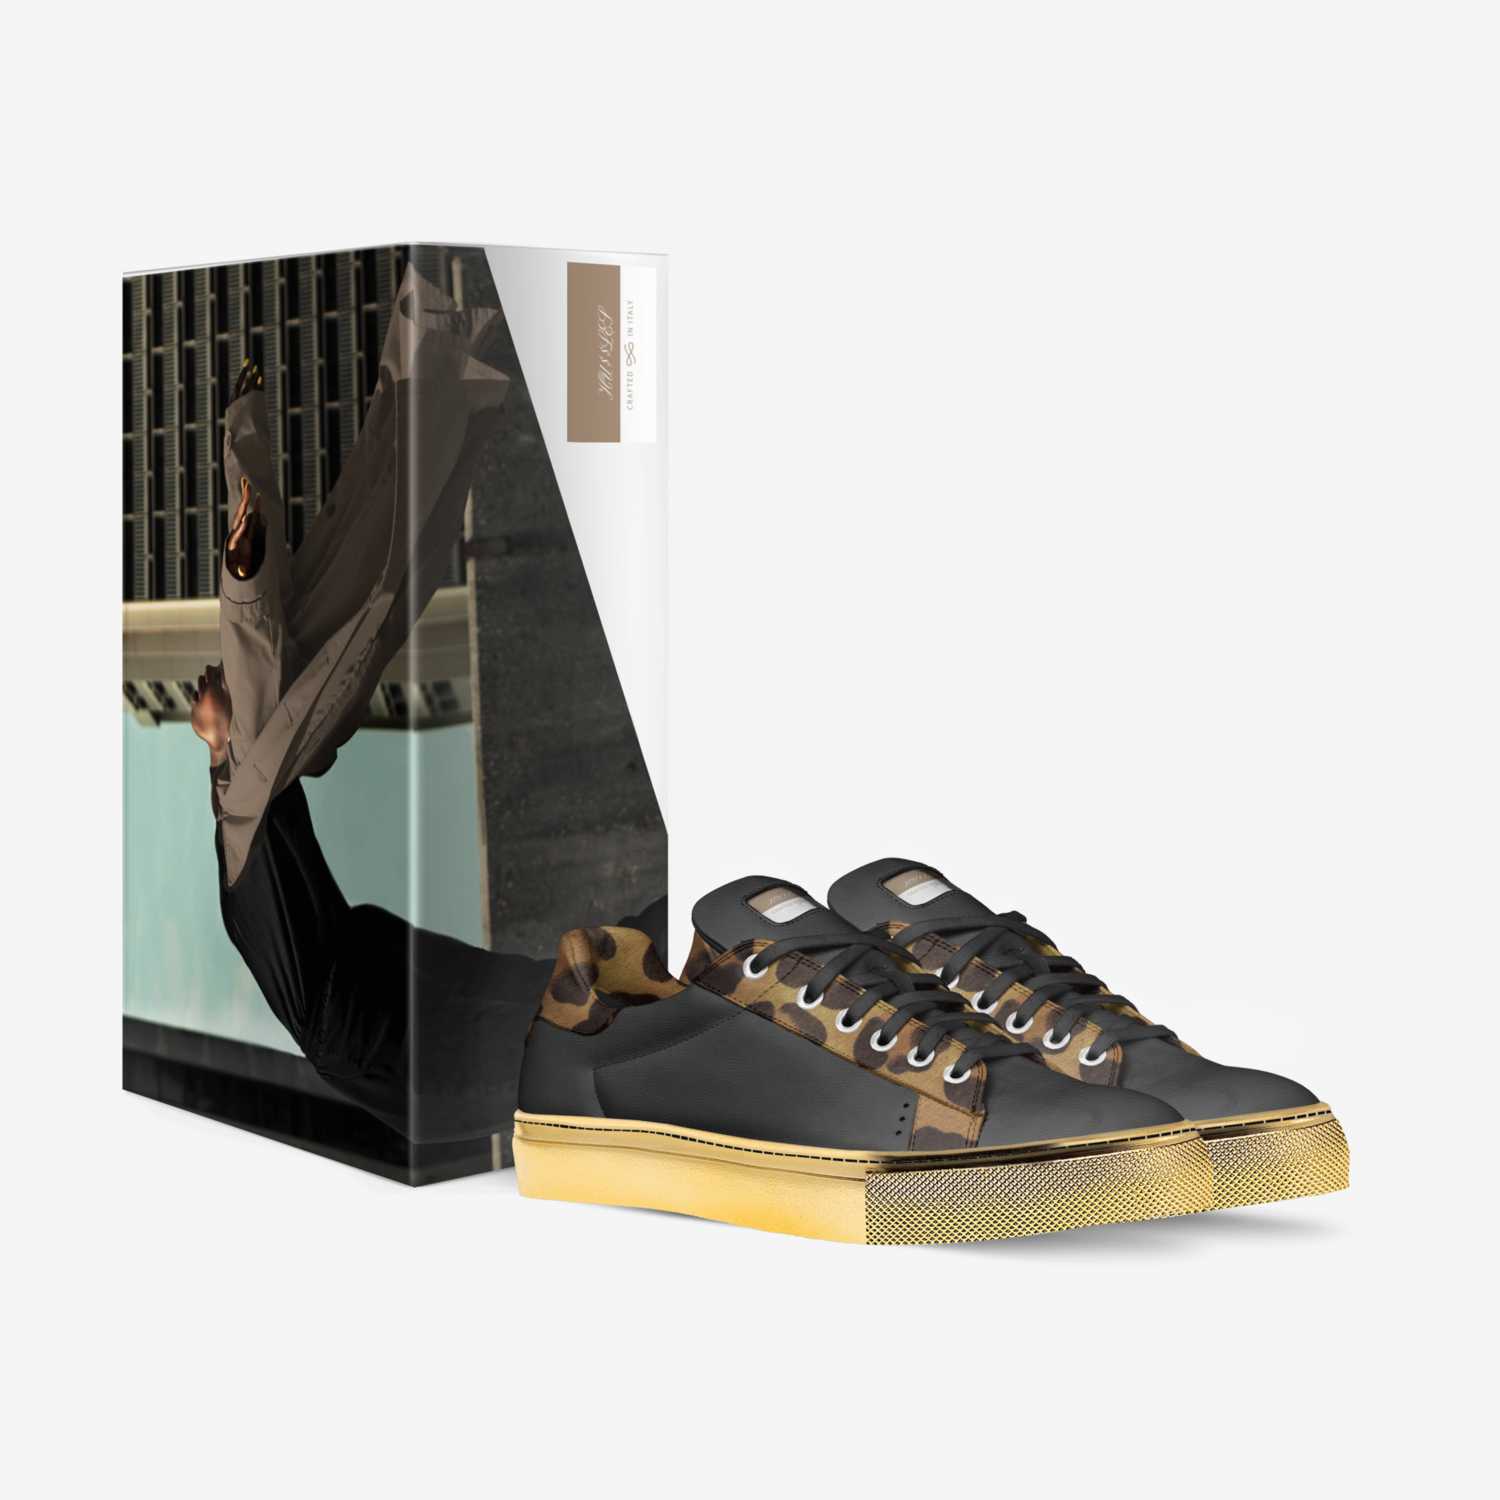 HU$$LES custom made in Italy shoes by Maygan Johnson | Box view